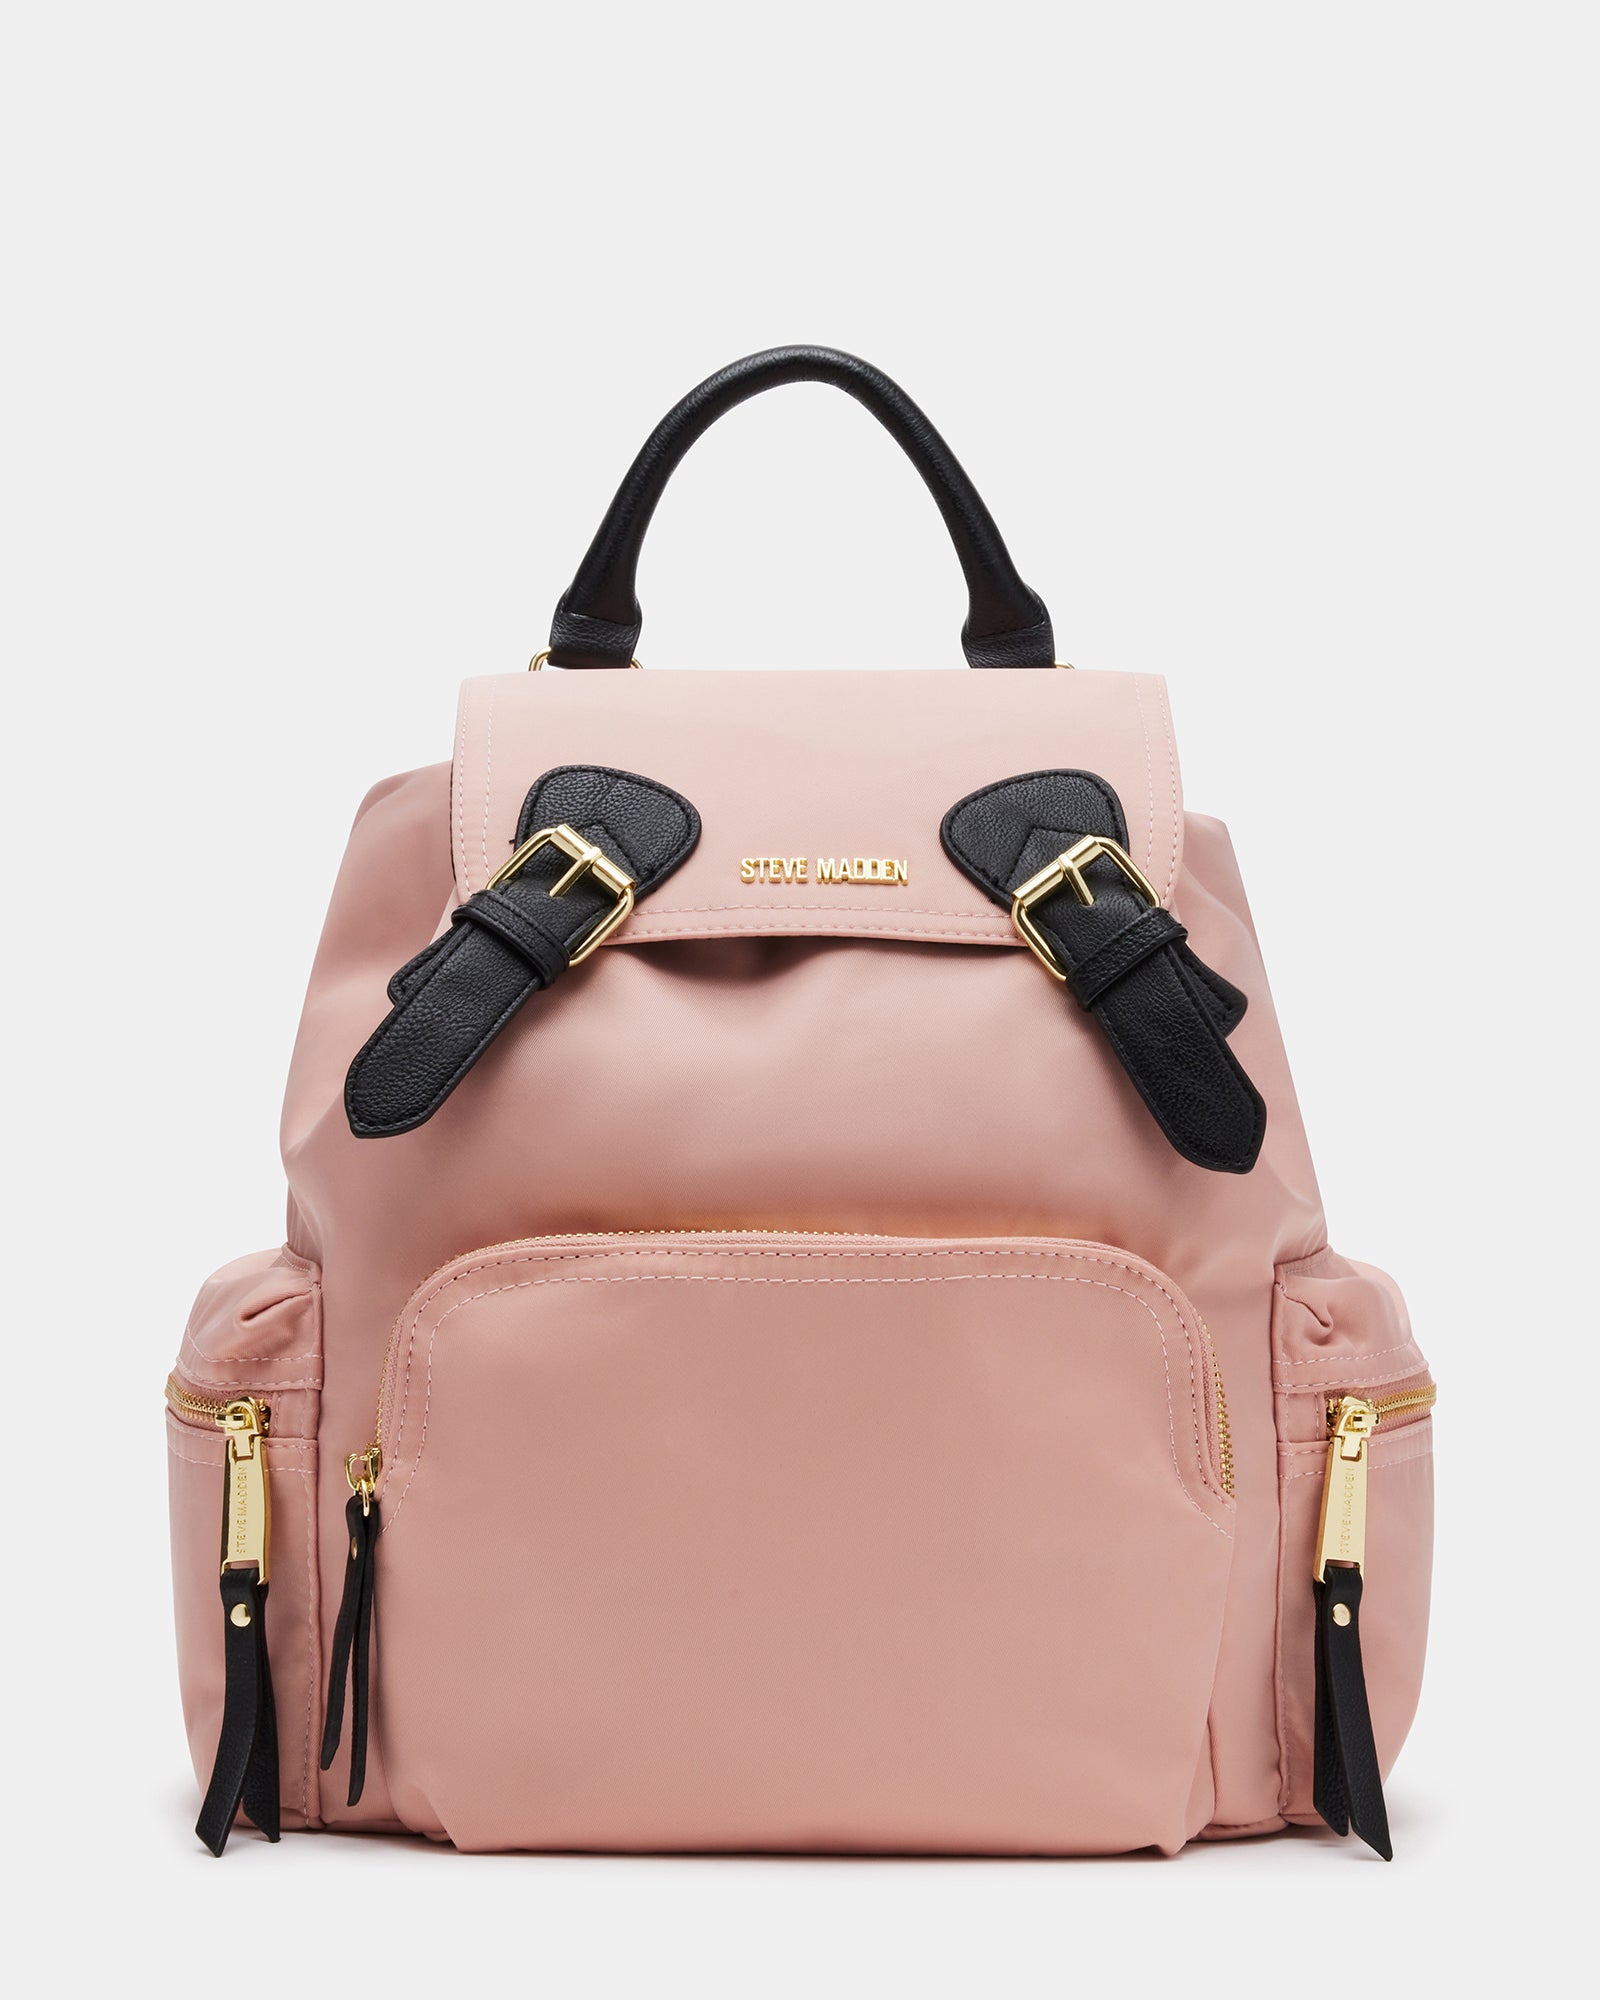 Bolsa Nova Slouchy Tote in Pink – Bolsa Nova Handbags